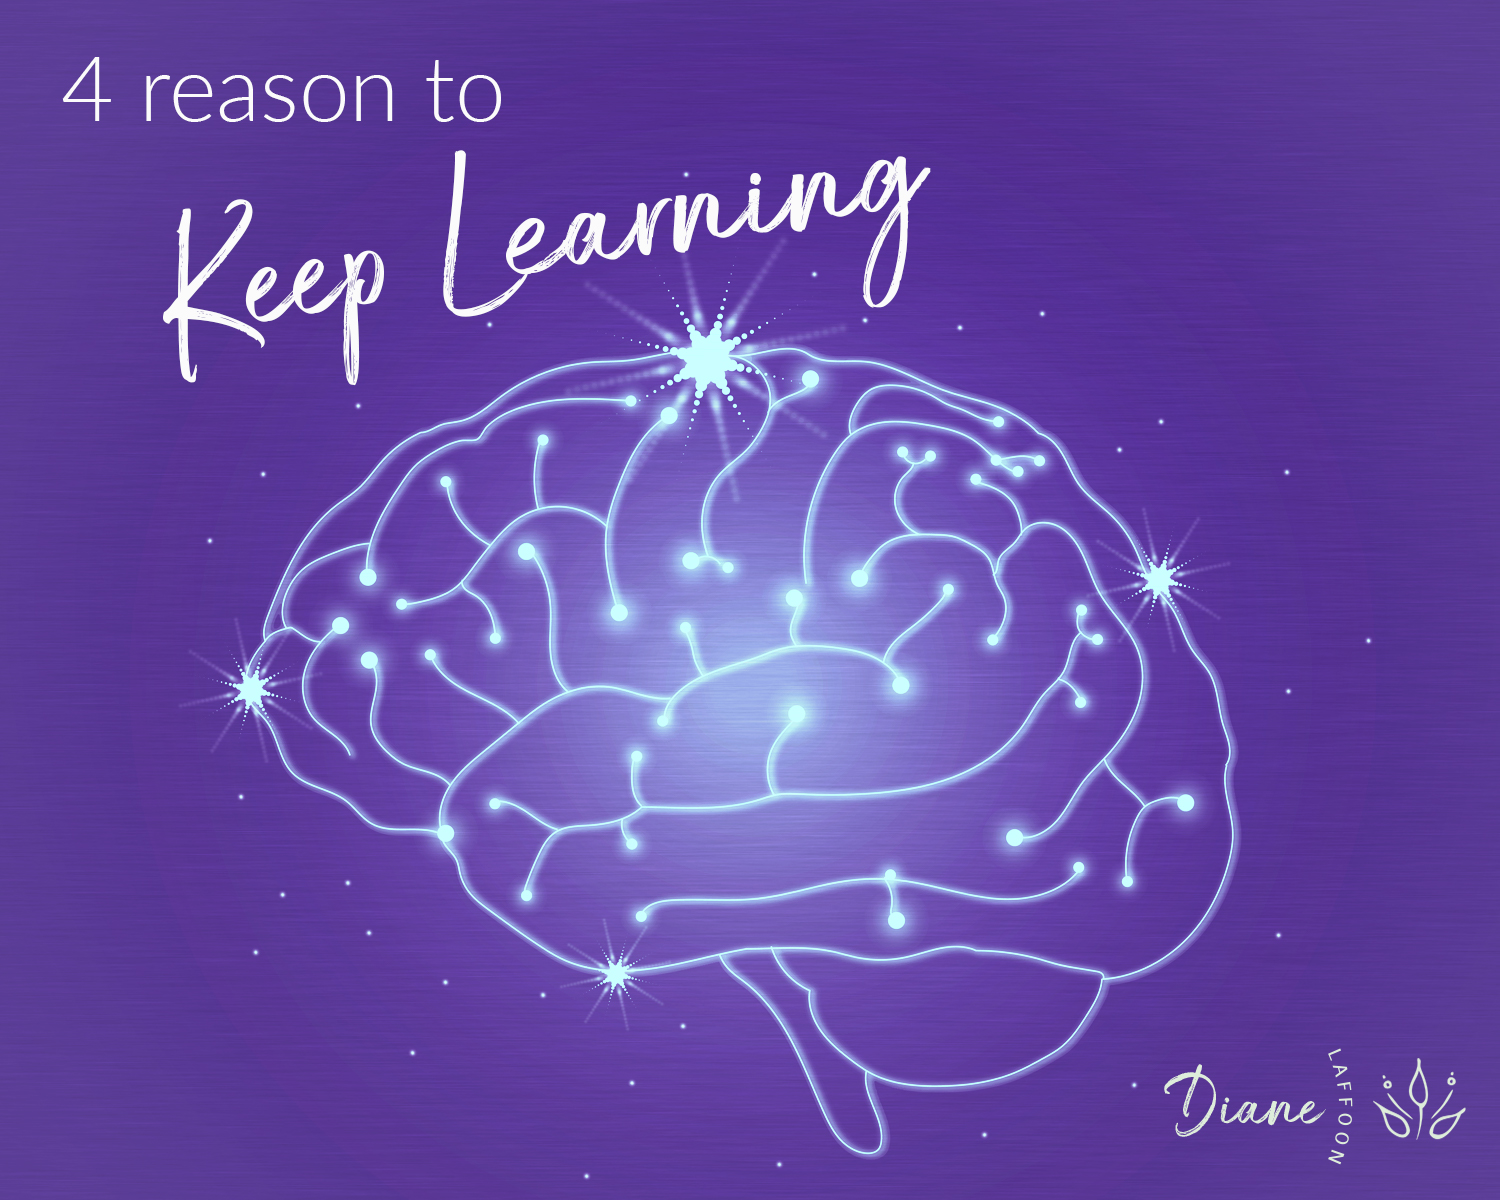 Keep Learning blog